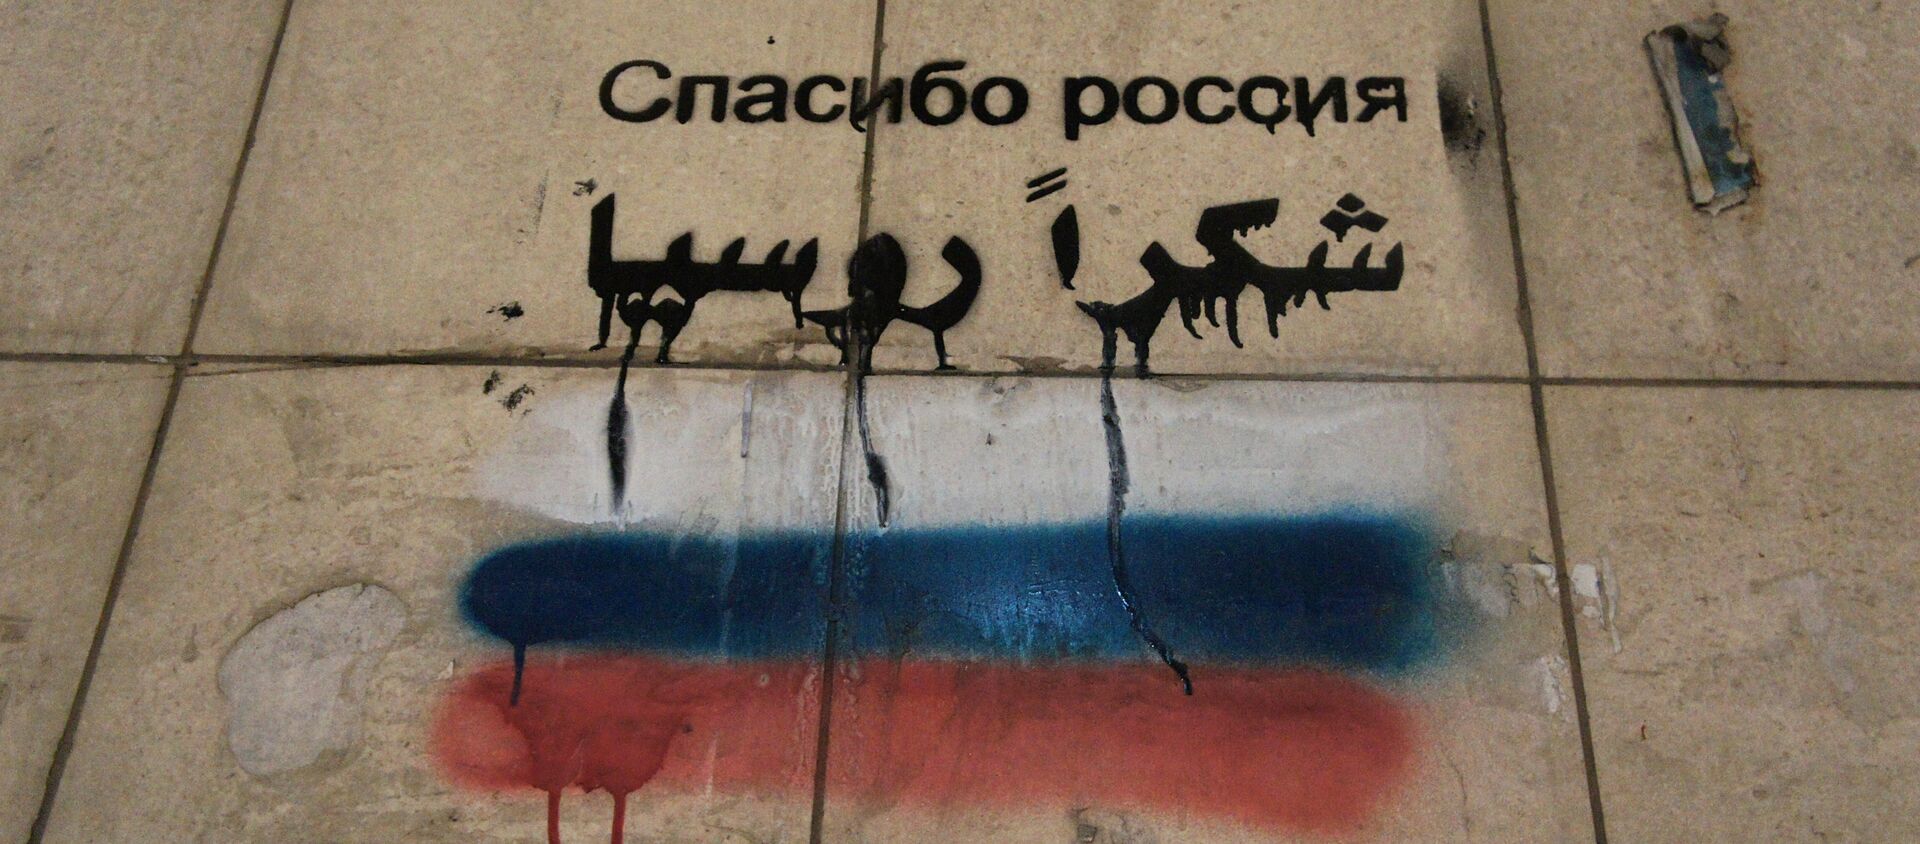 El graffiti en un muro en Siria. La frase dice «Gracias, Rusia» - Sputnik Mundo, 1920, 18.10.2019